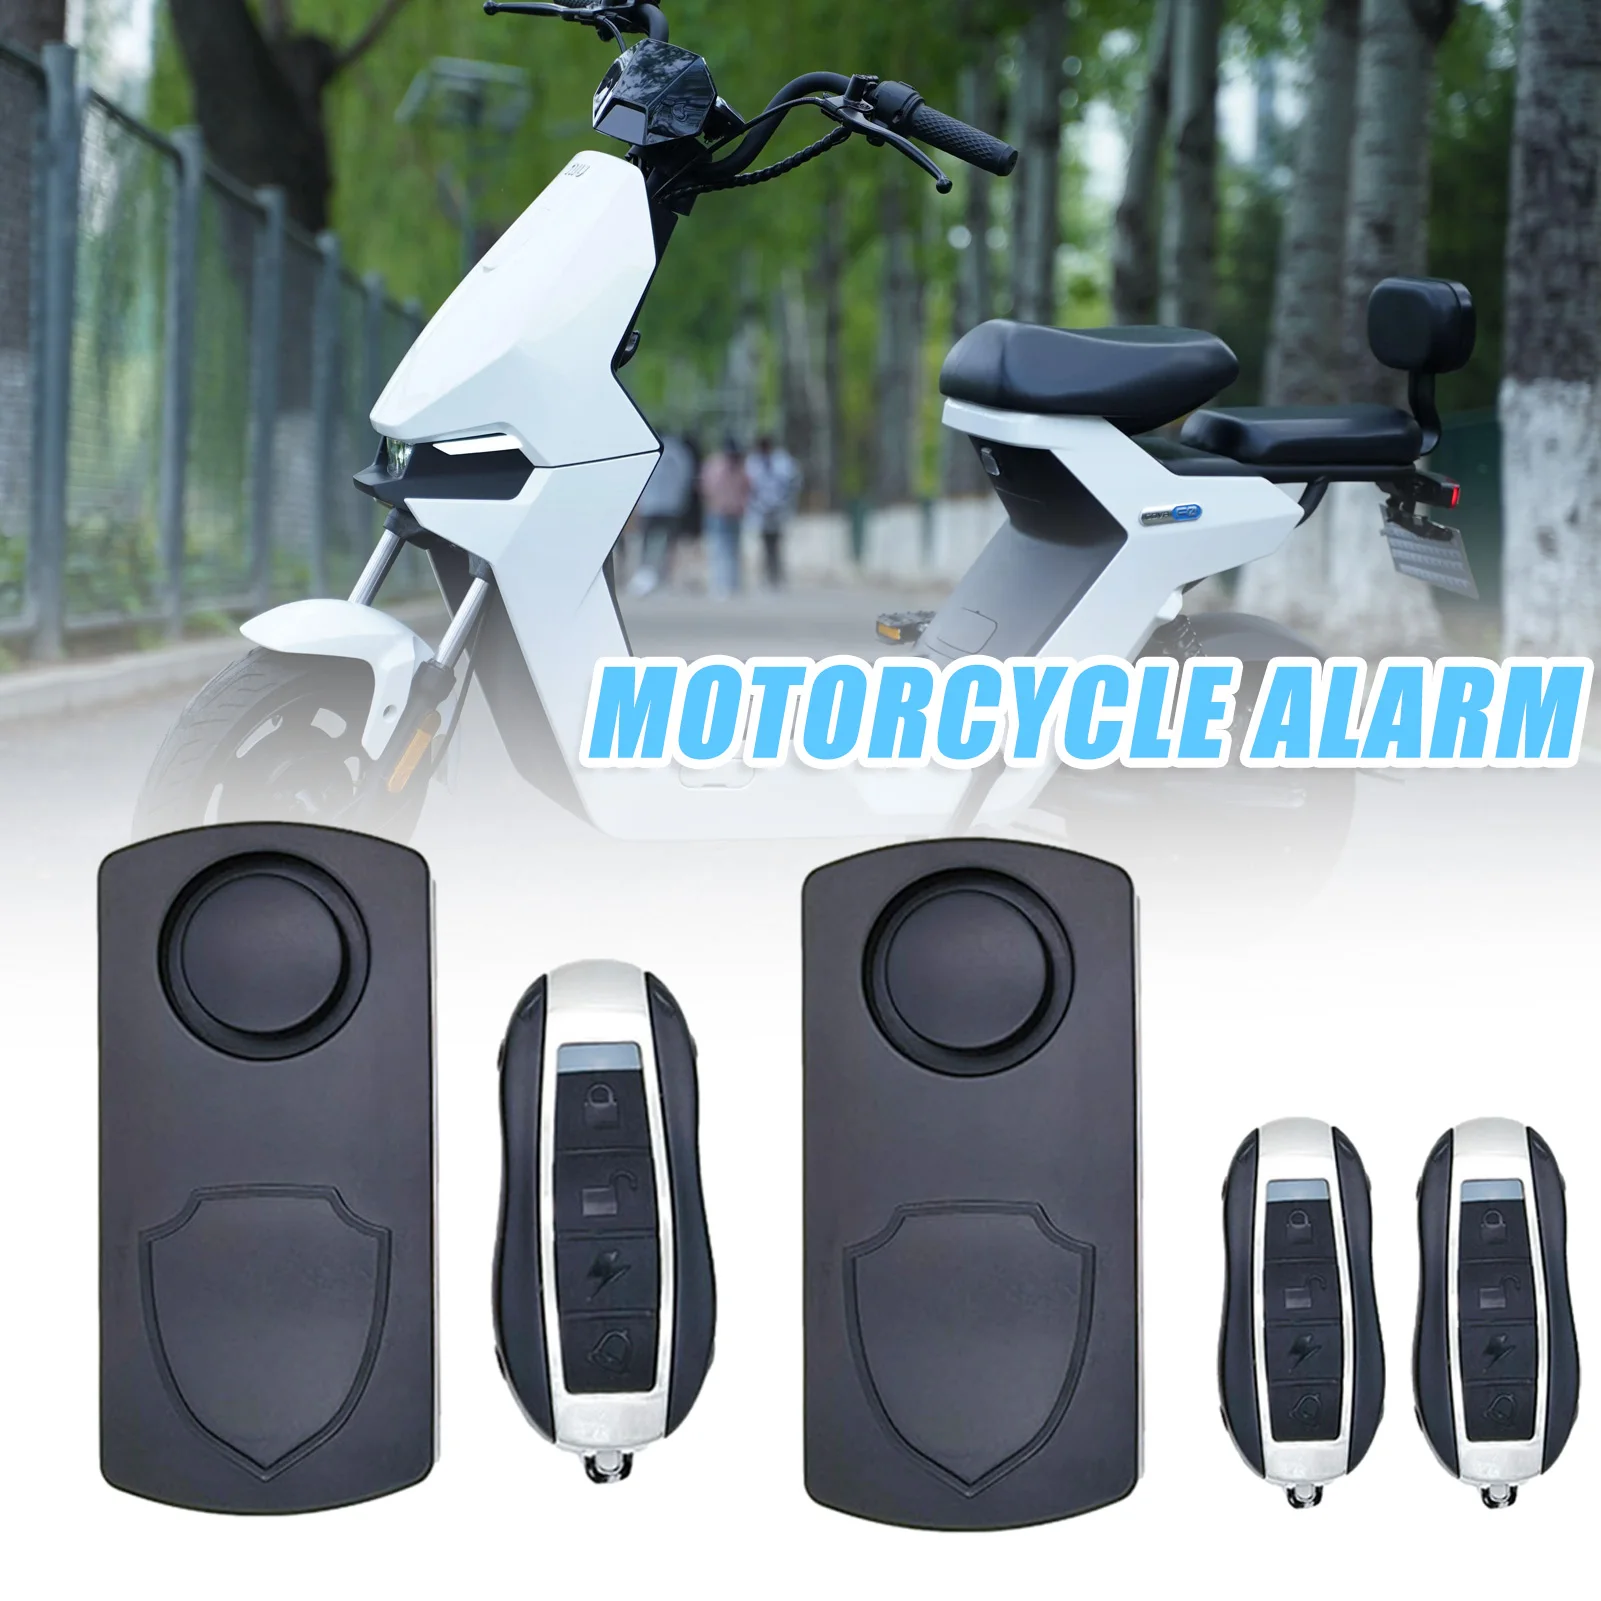 

Wireless Bike Alarm Waterproof Wireless Vibration Motion Sensor 110dB Loud Vibration Sensing Alarm System For Bicycle E-Scooter